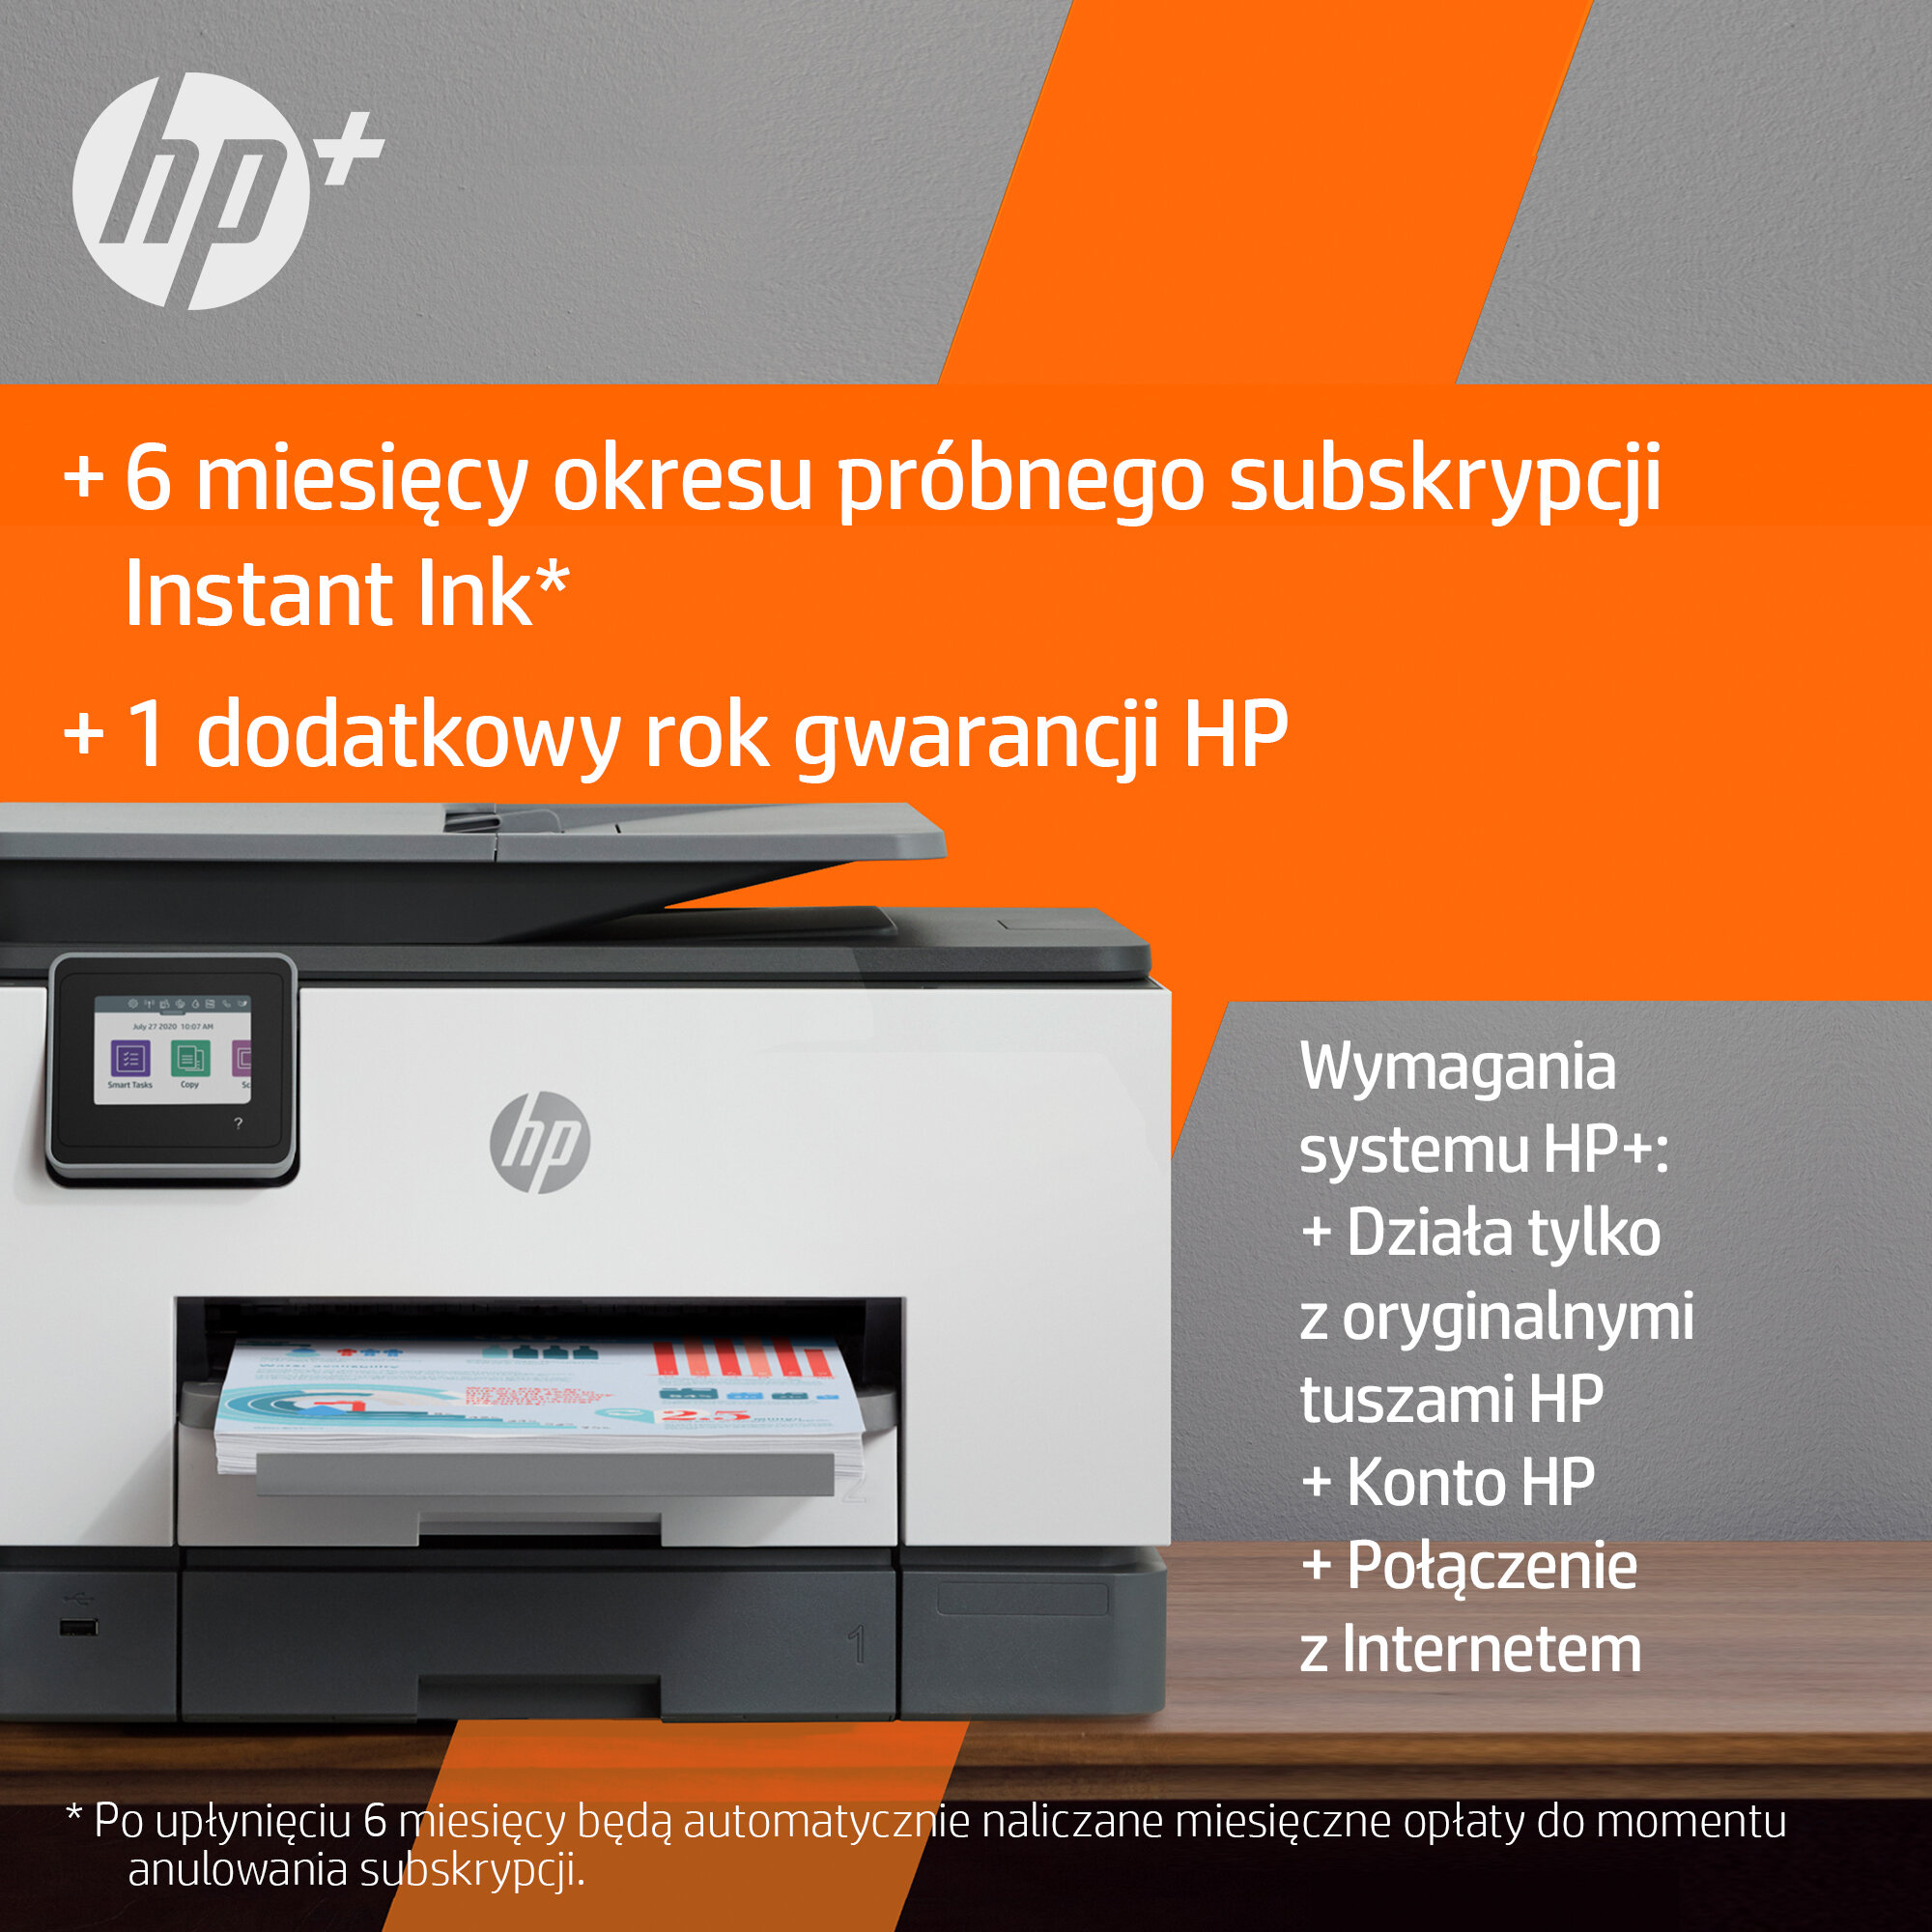 HP OfficeJet Pro 9022 A4 Colour Multifunction Inkjet Printer 